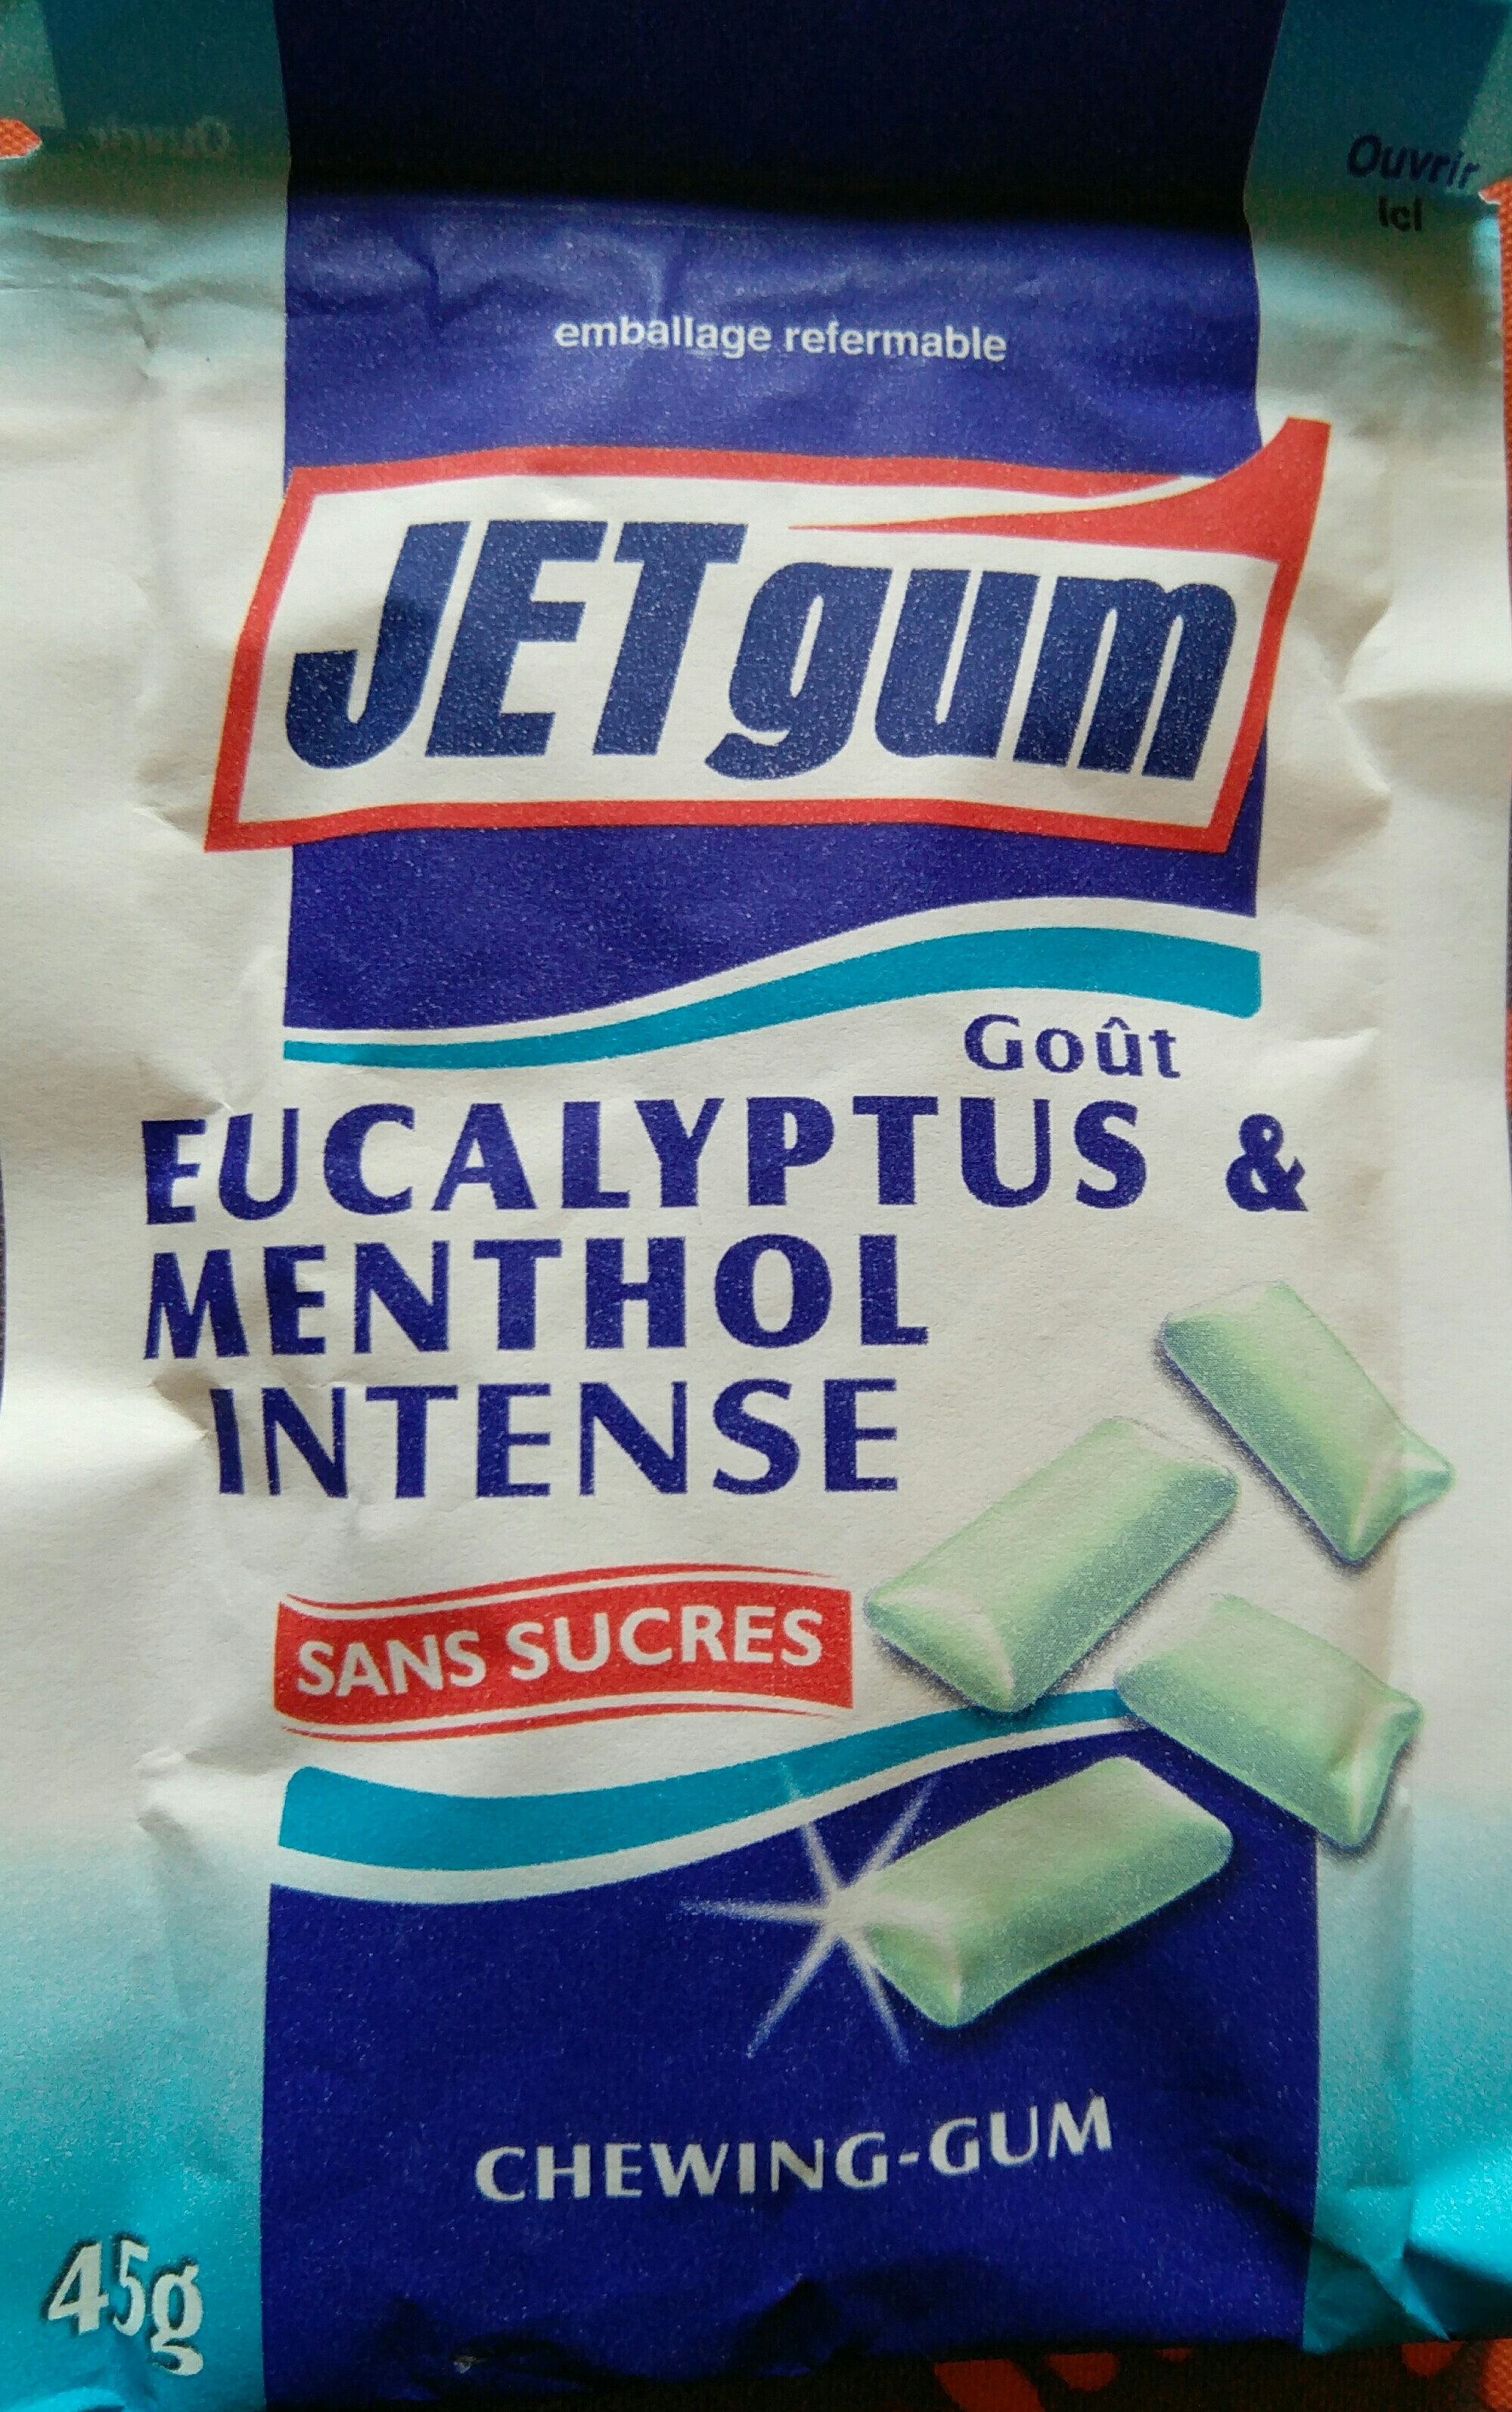 JETgum - Goût Eucalyptus & Menthol Intense - Product - fr